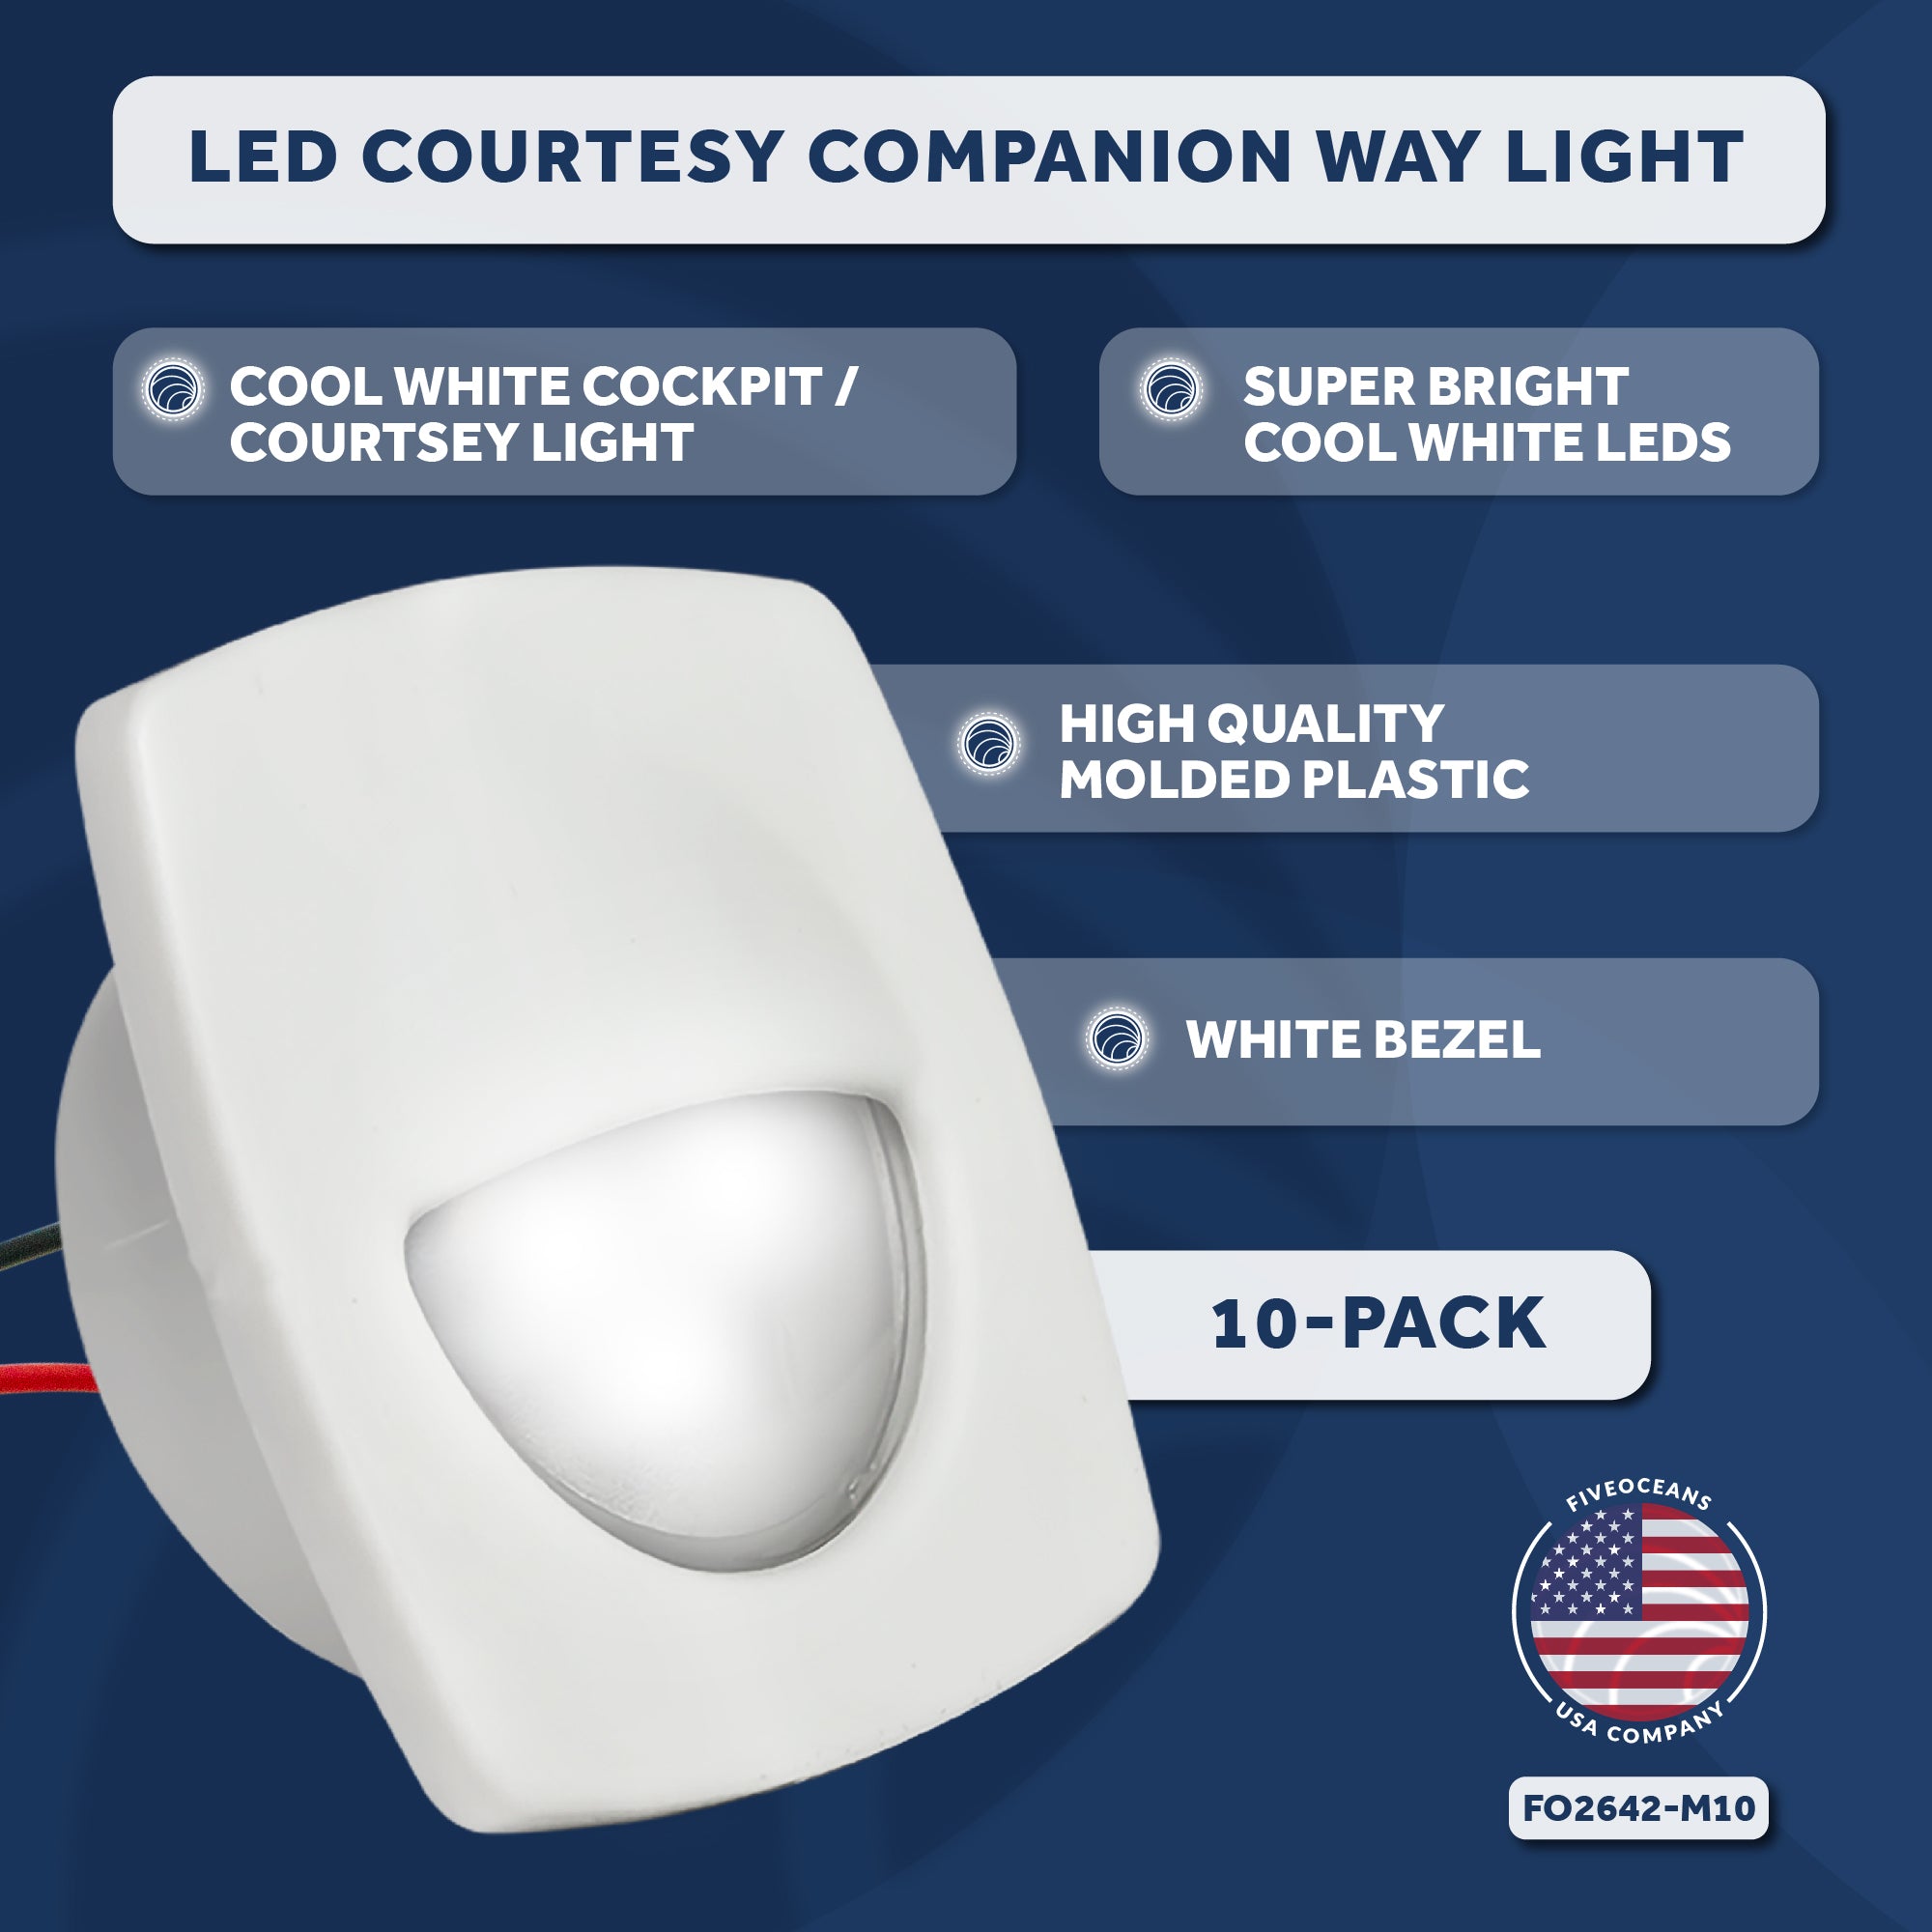 LED Courtesy Companion Way Light, White Square, Cool White, 10-Pack - FO2642-M10